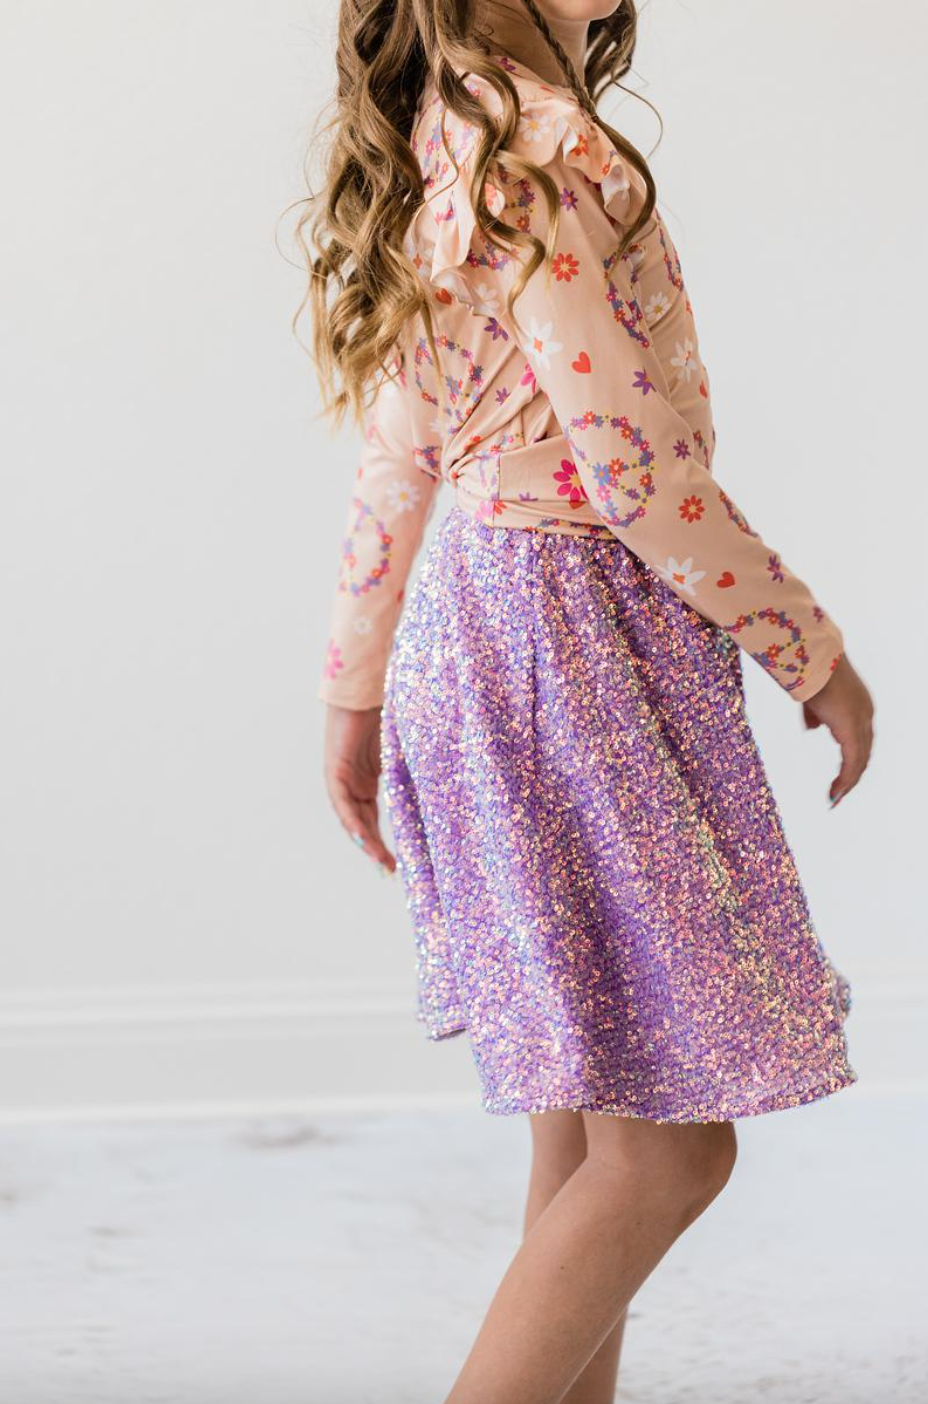 Mila & Rose Purple Sequin Twirl Skirt